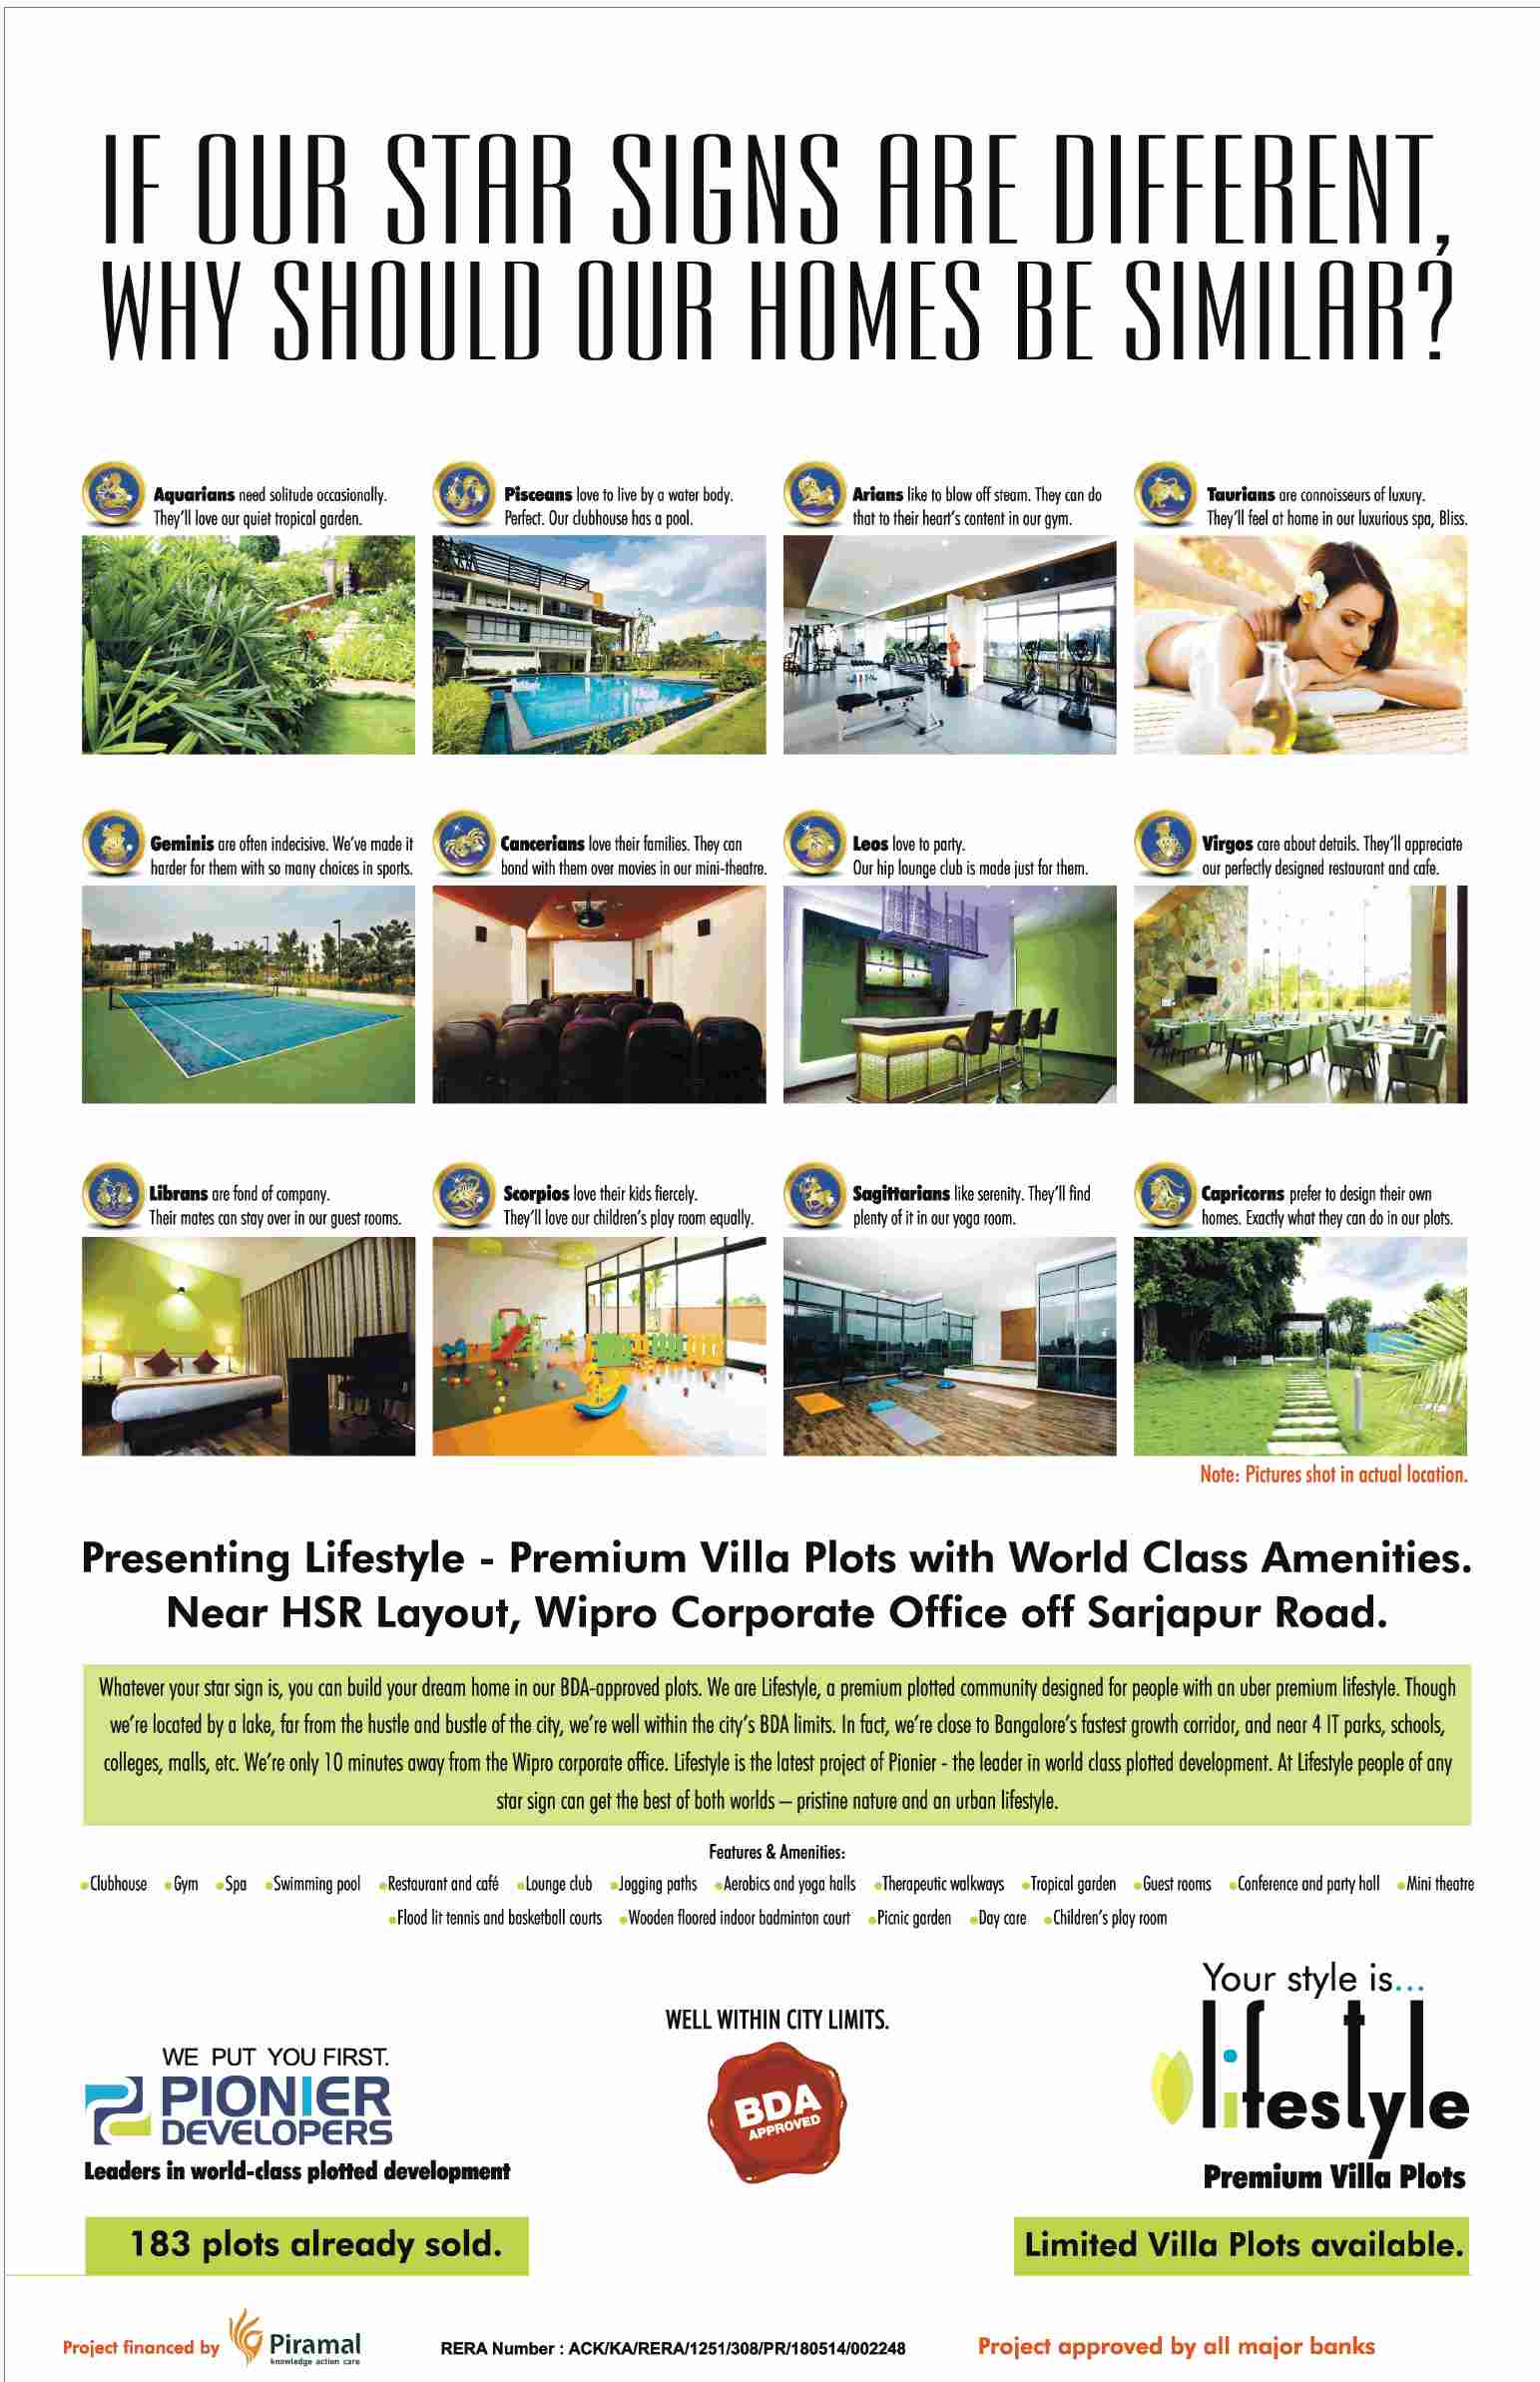 Presenting Pionier Lifestyle with premium villa plots & world-class amenities in Bangalore